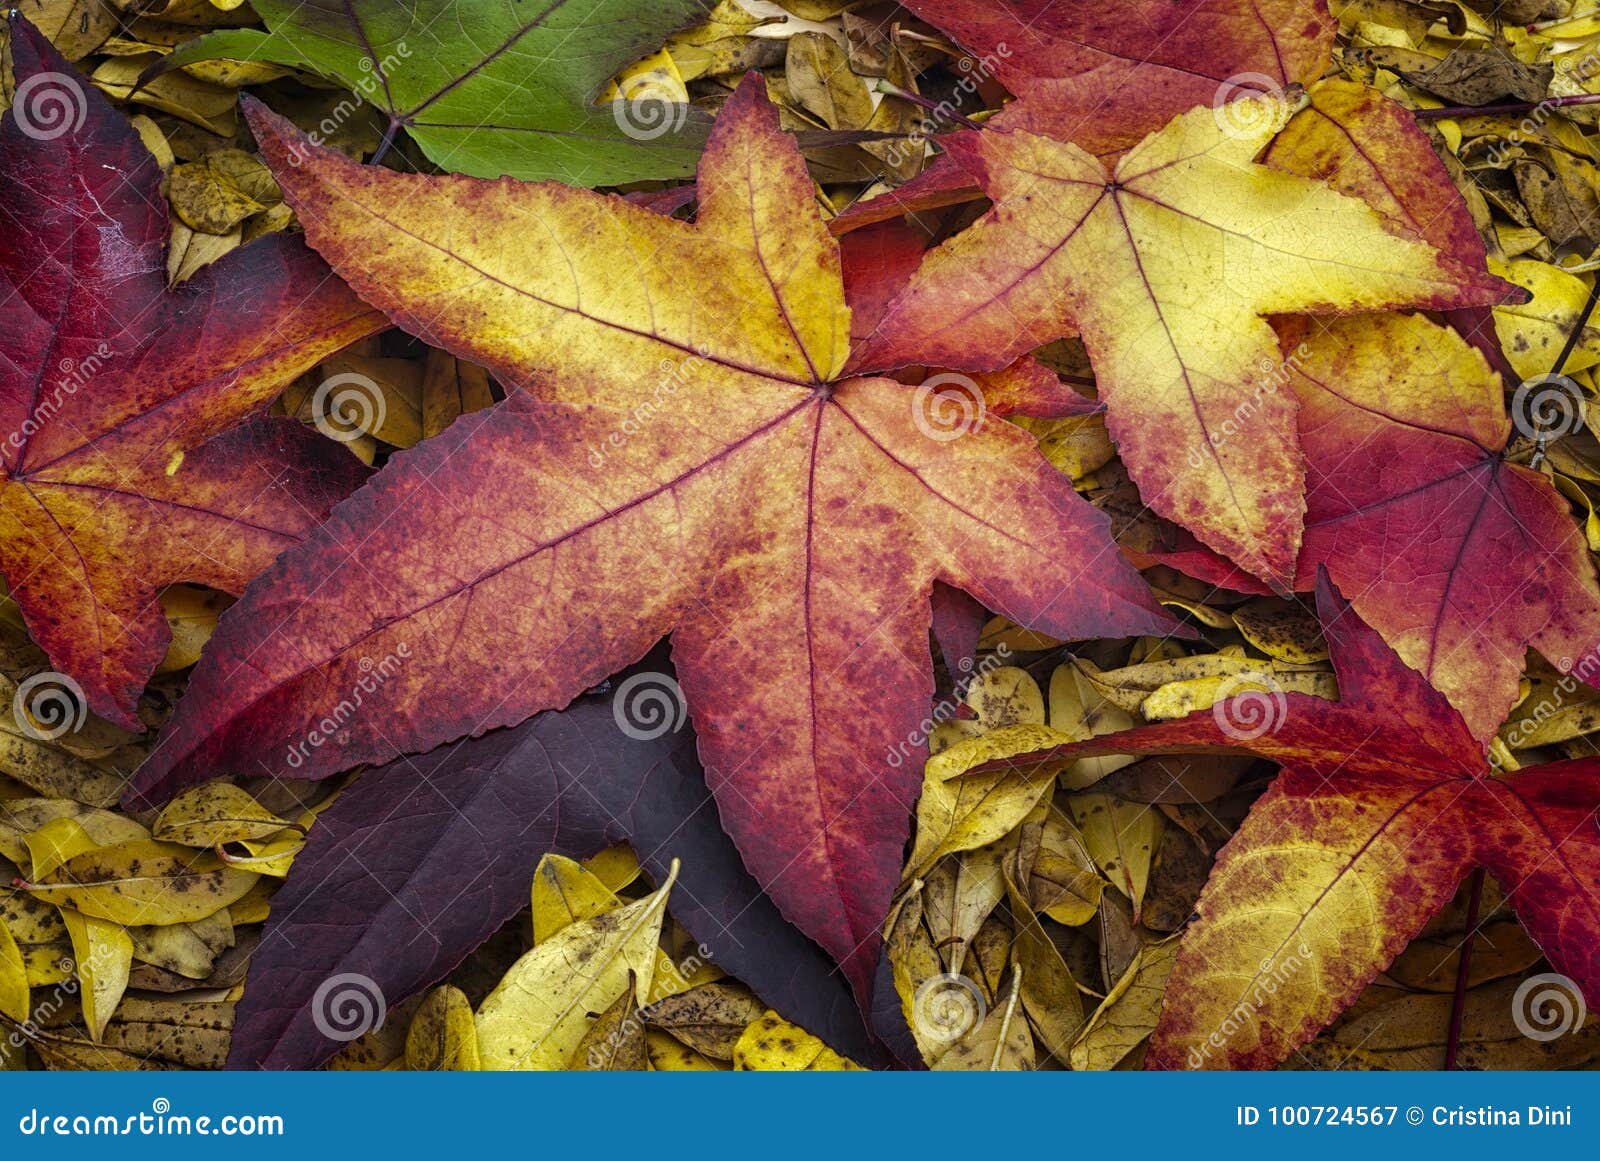 autumn leaves of american sweetgum liquidambar styraciflua